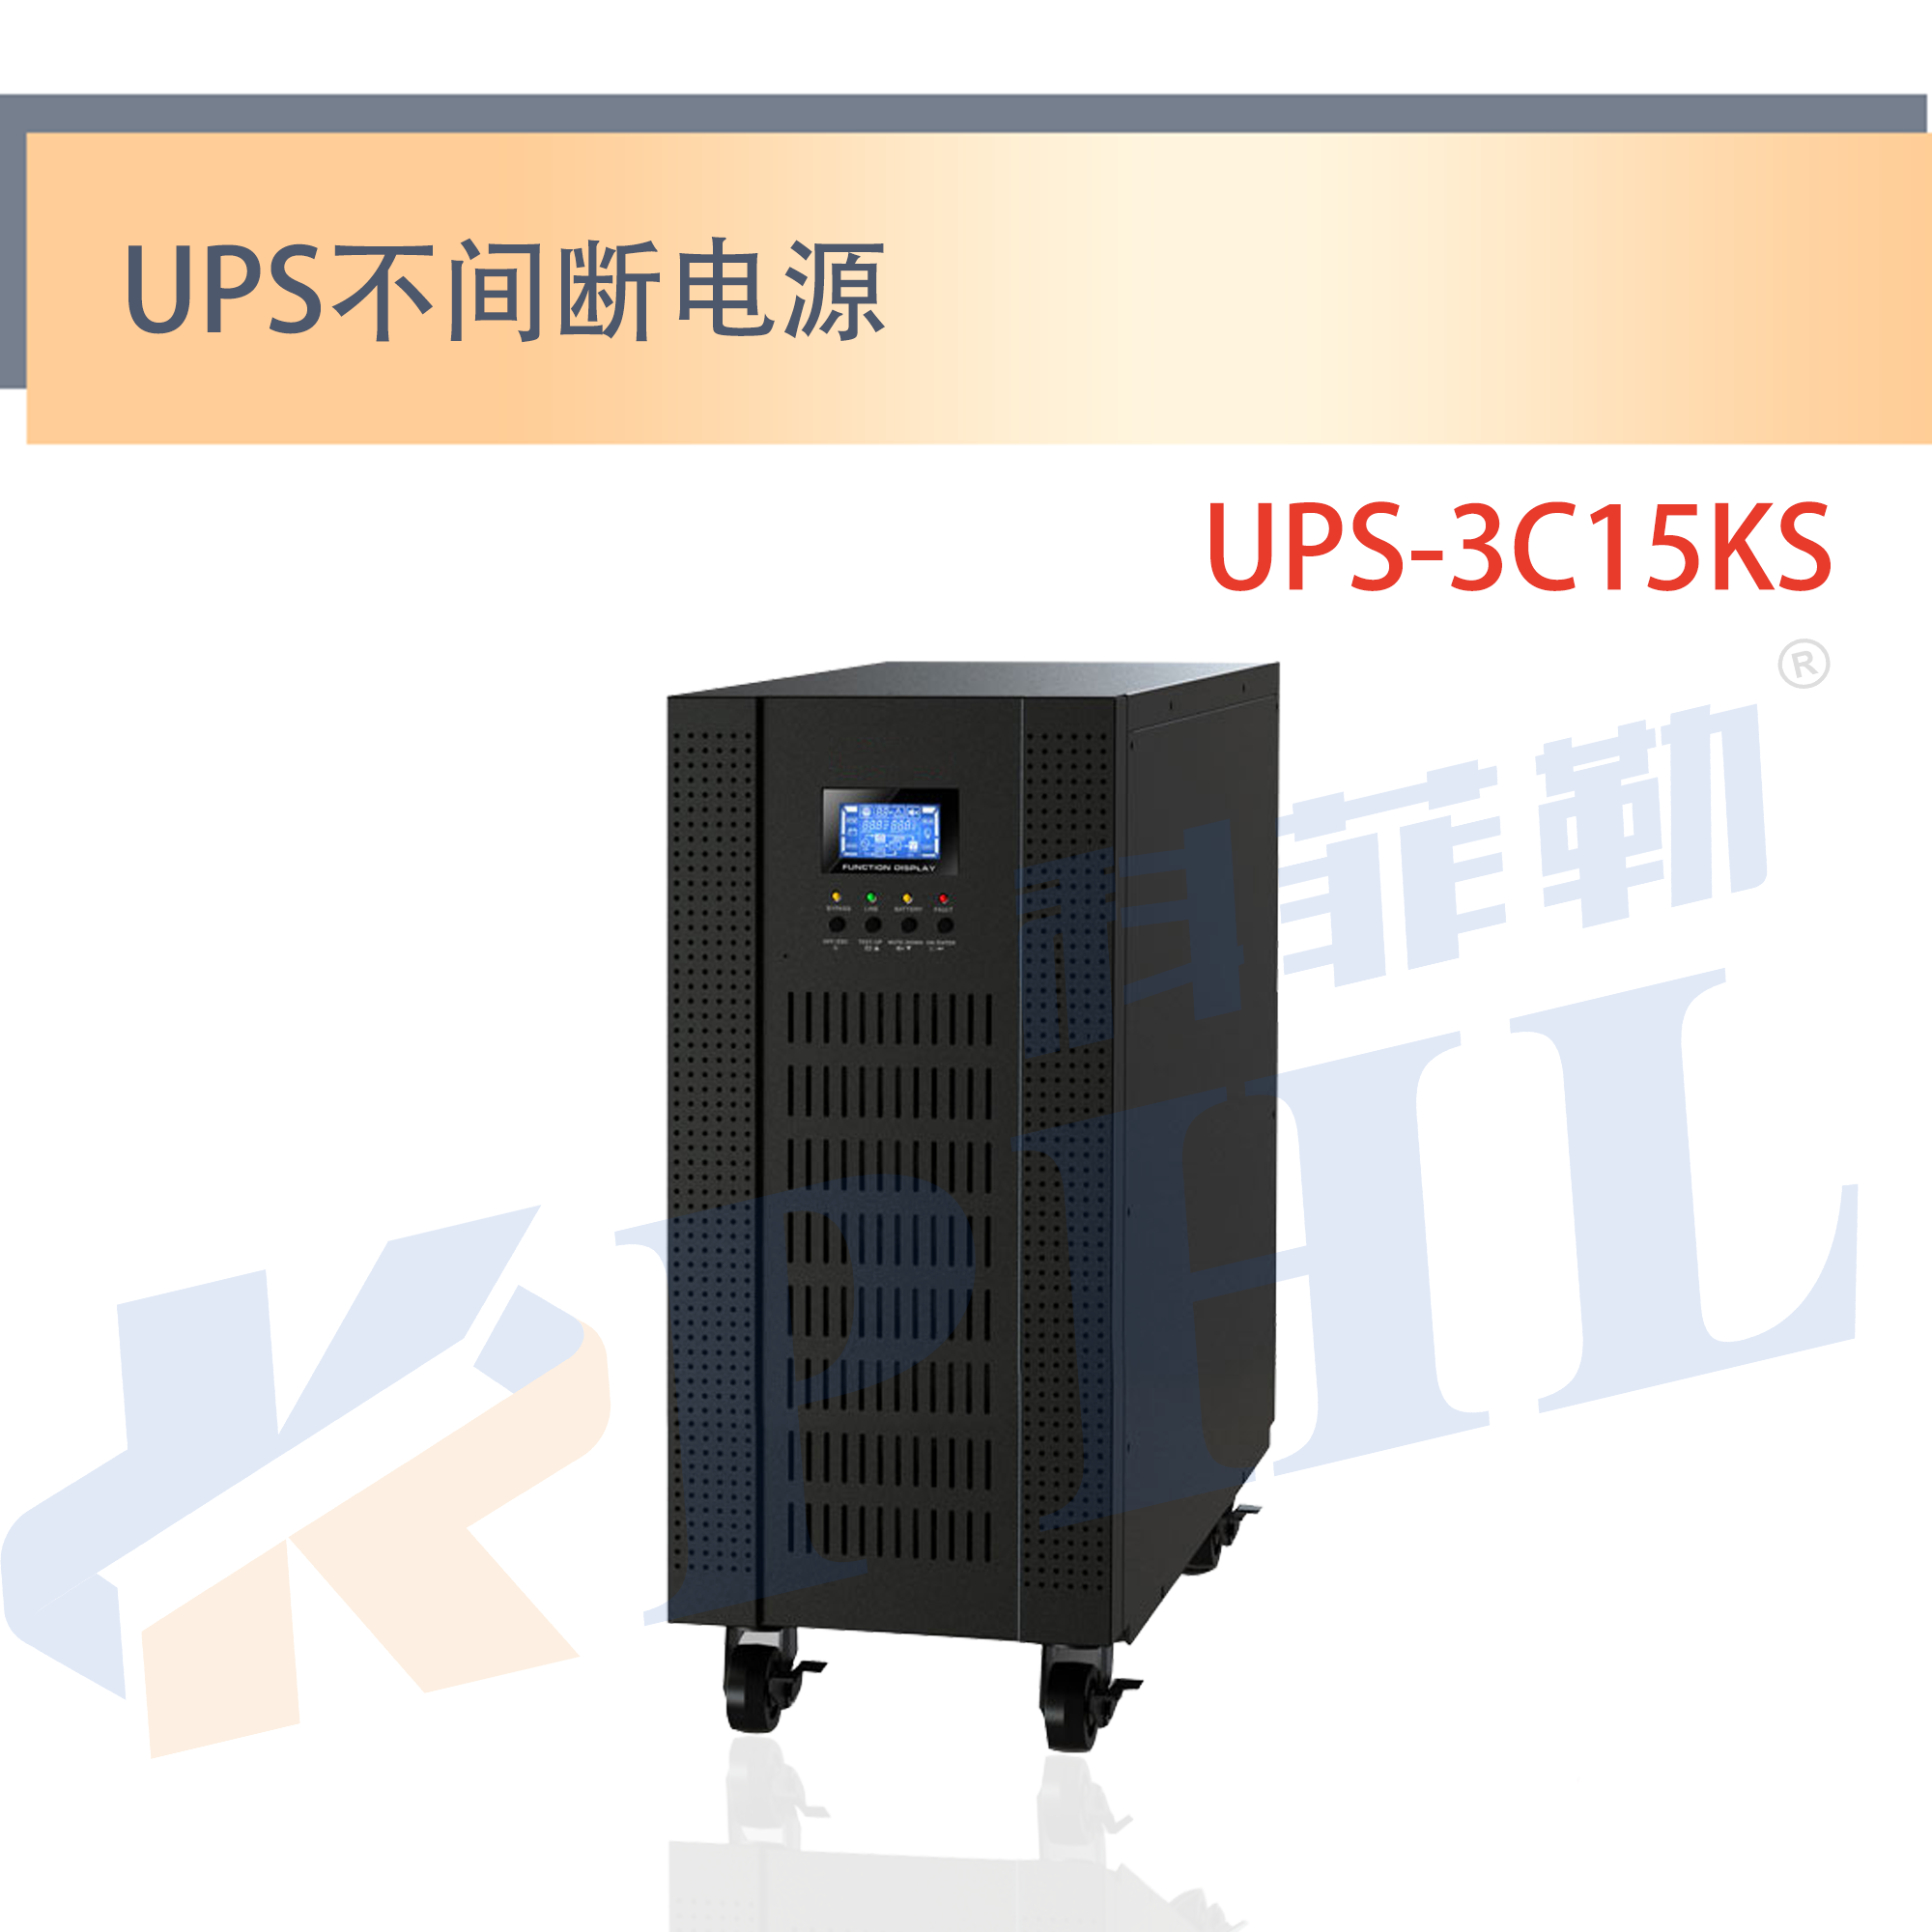 UPS-3C15KS